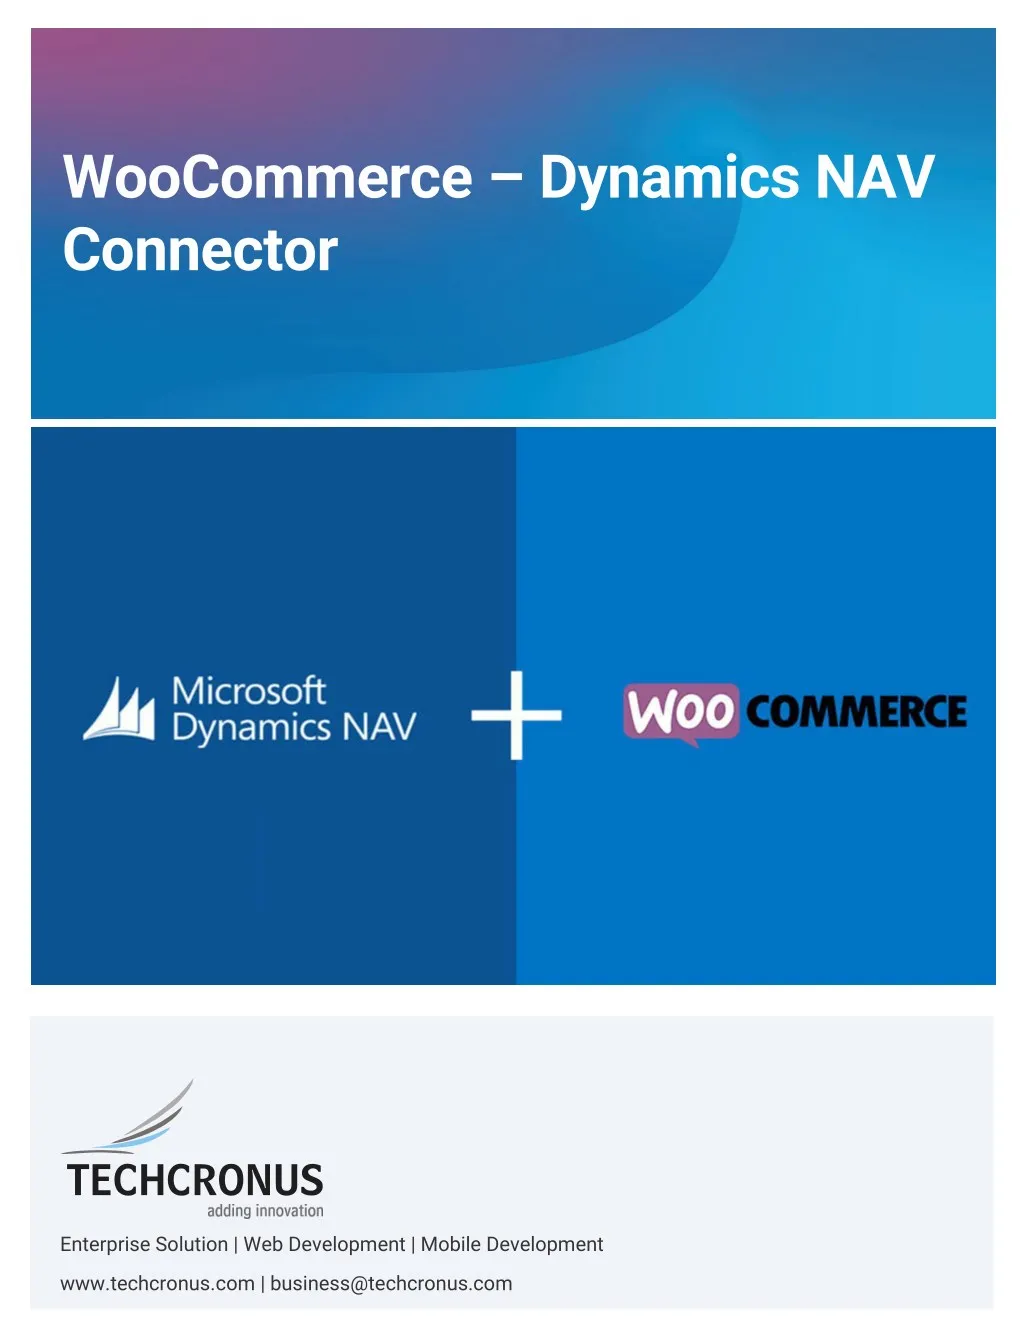 woocommerce dynamics nav connector